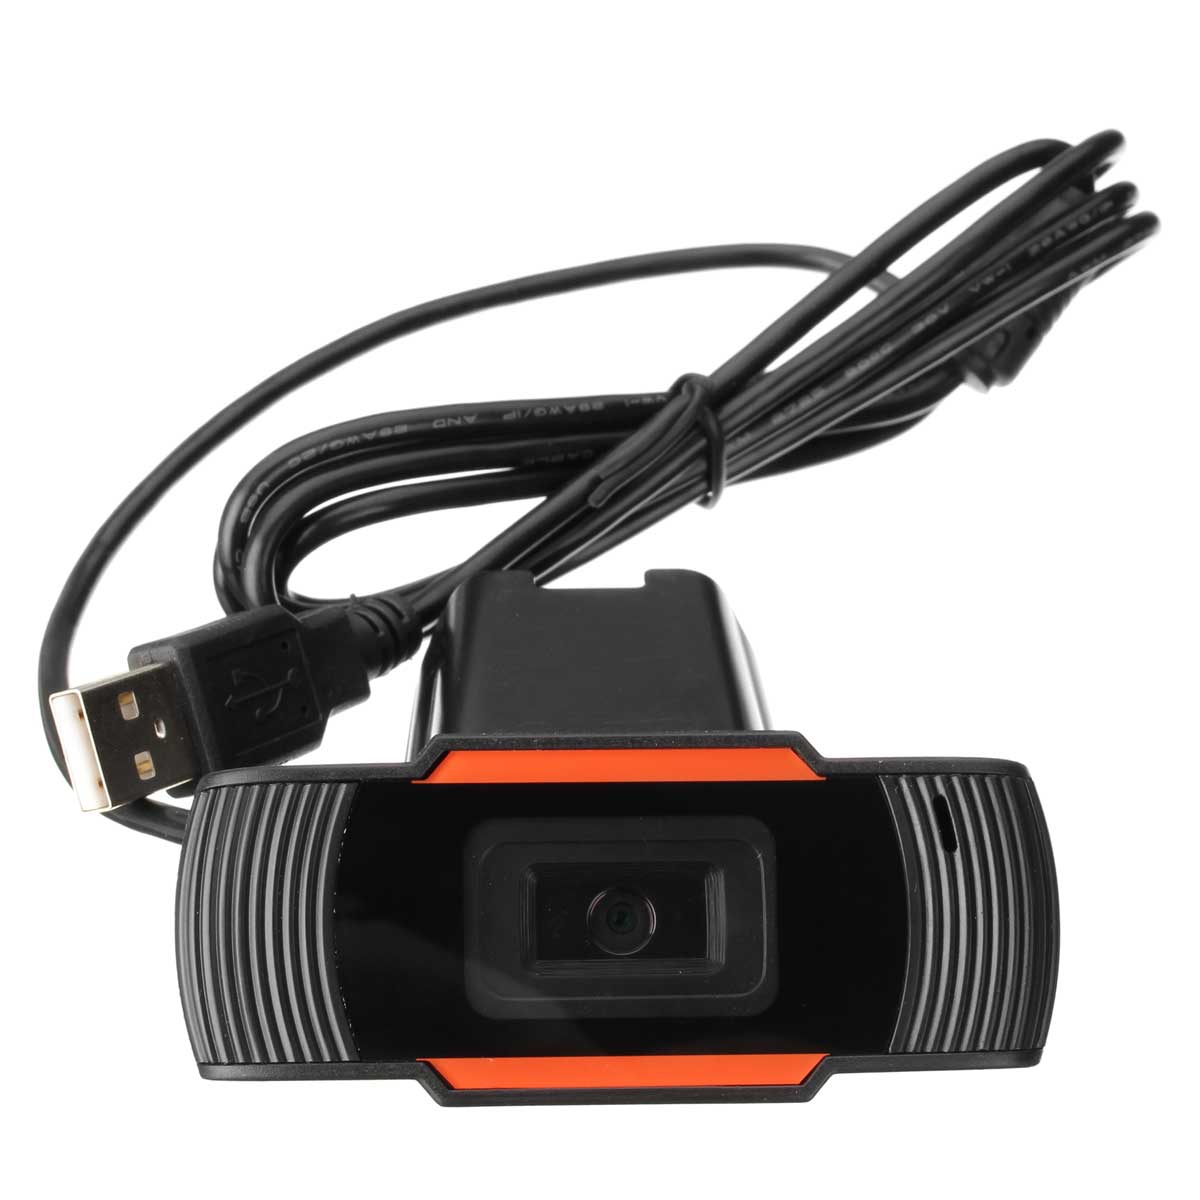 HXSJ A870C USB 2.0 PC Camera 640X480 Video Record Webcamsera with MIC for Computer PC Laptop Skype MSN